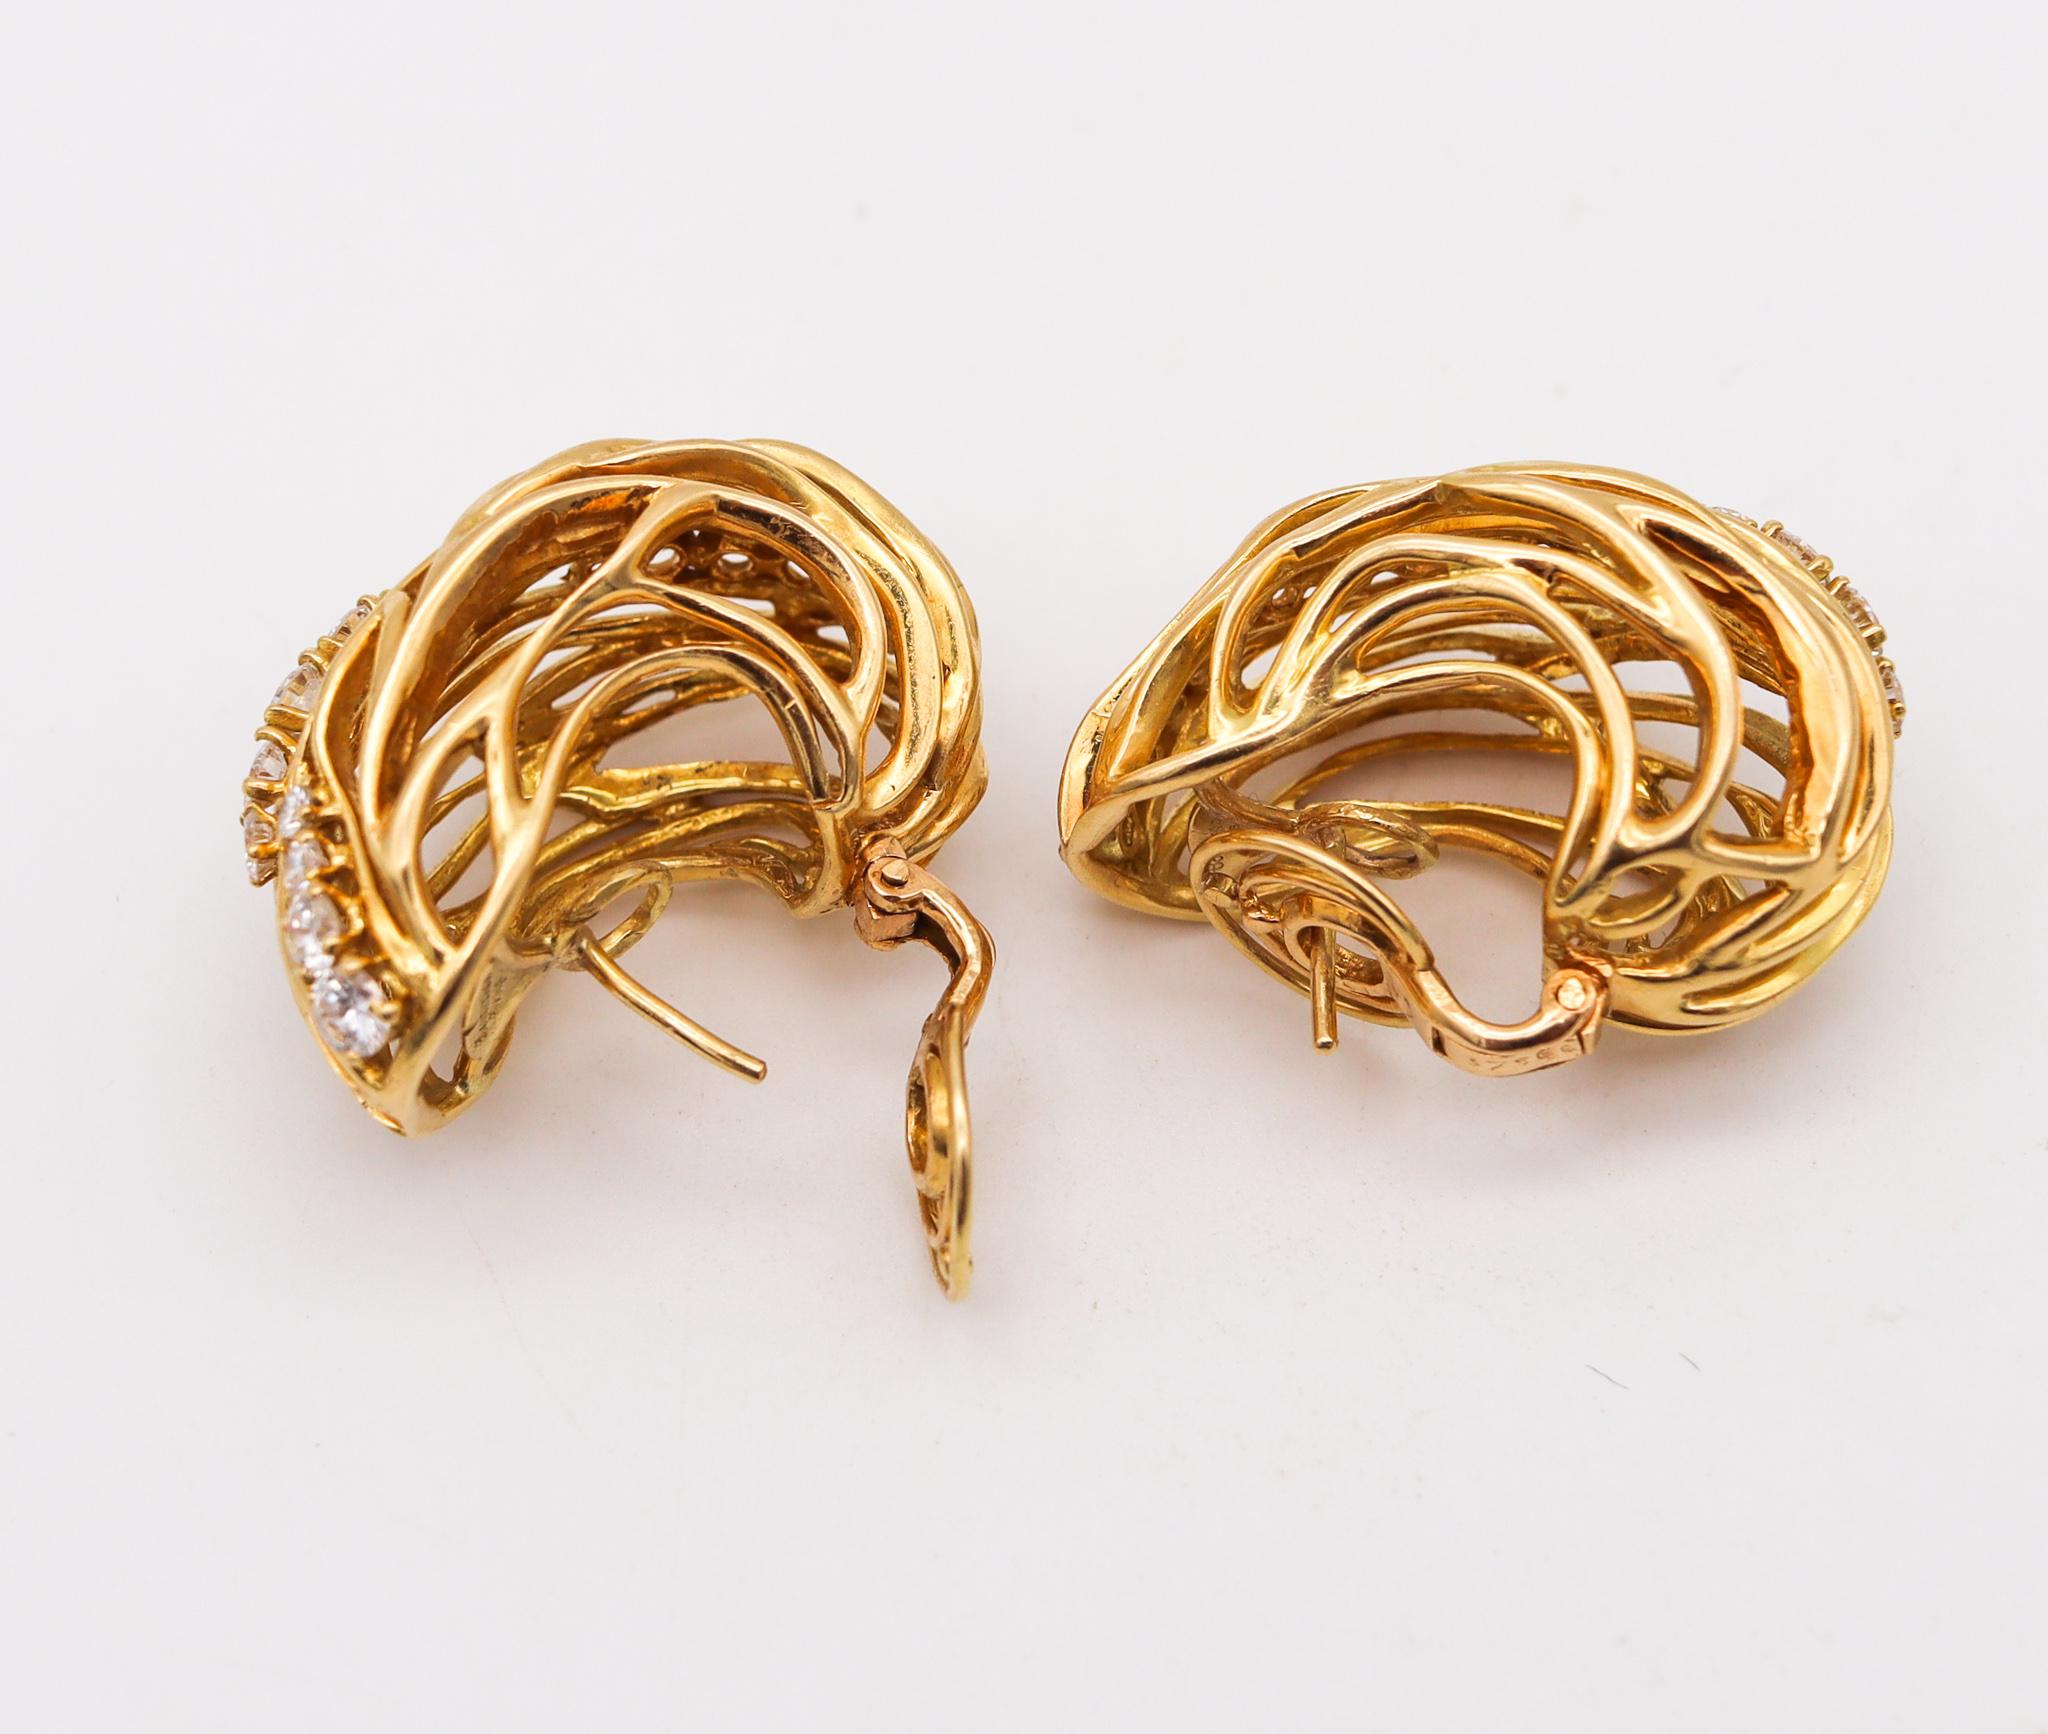 Modernist Boucheron 1970 Paris Andre Vassort Hoop Earrings 18Kt Gold with 3.26 Ct Diamonds